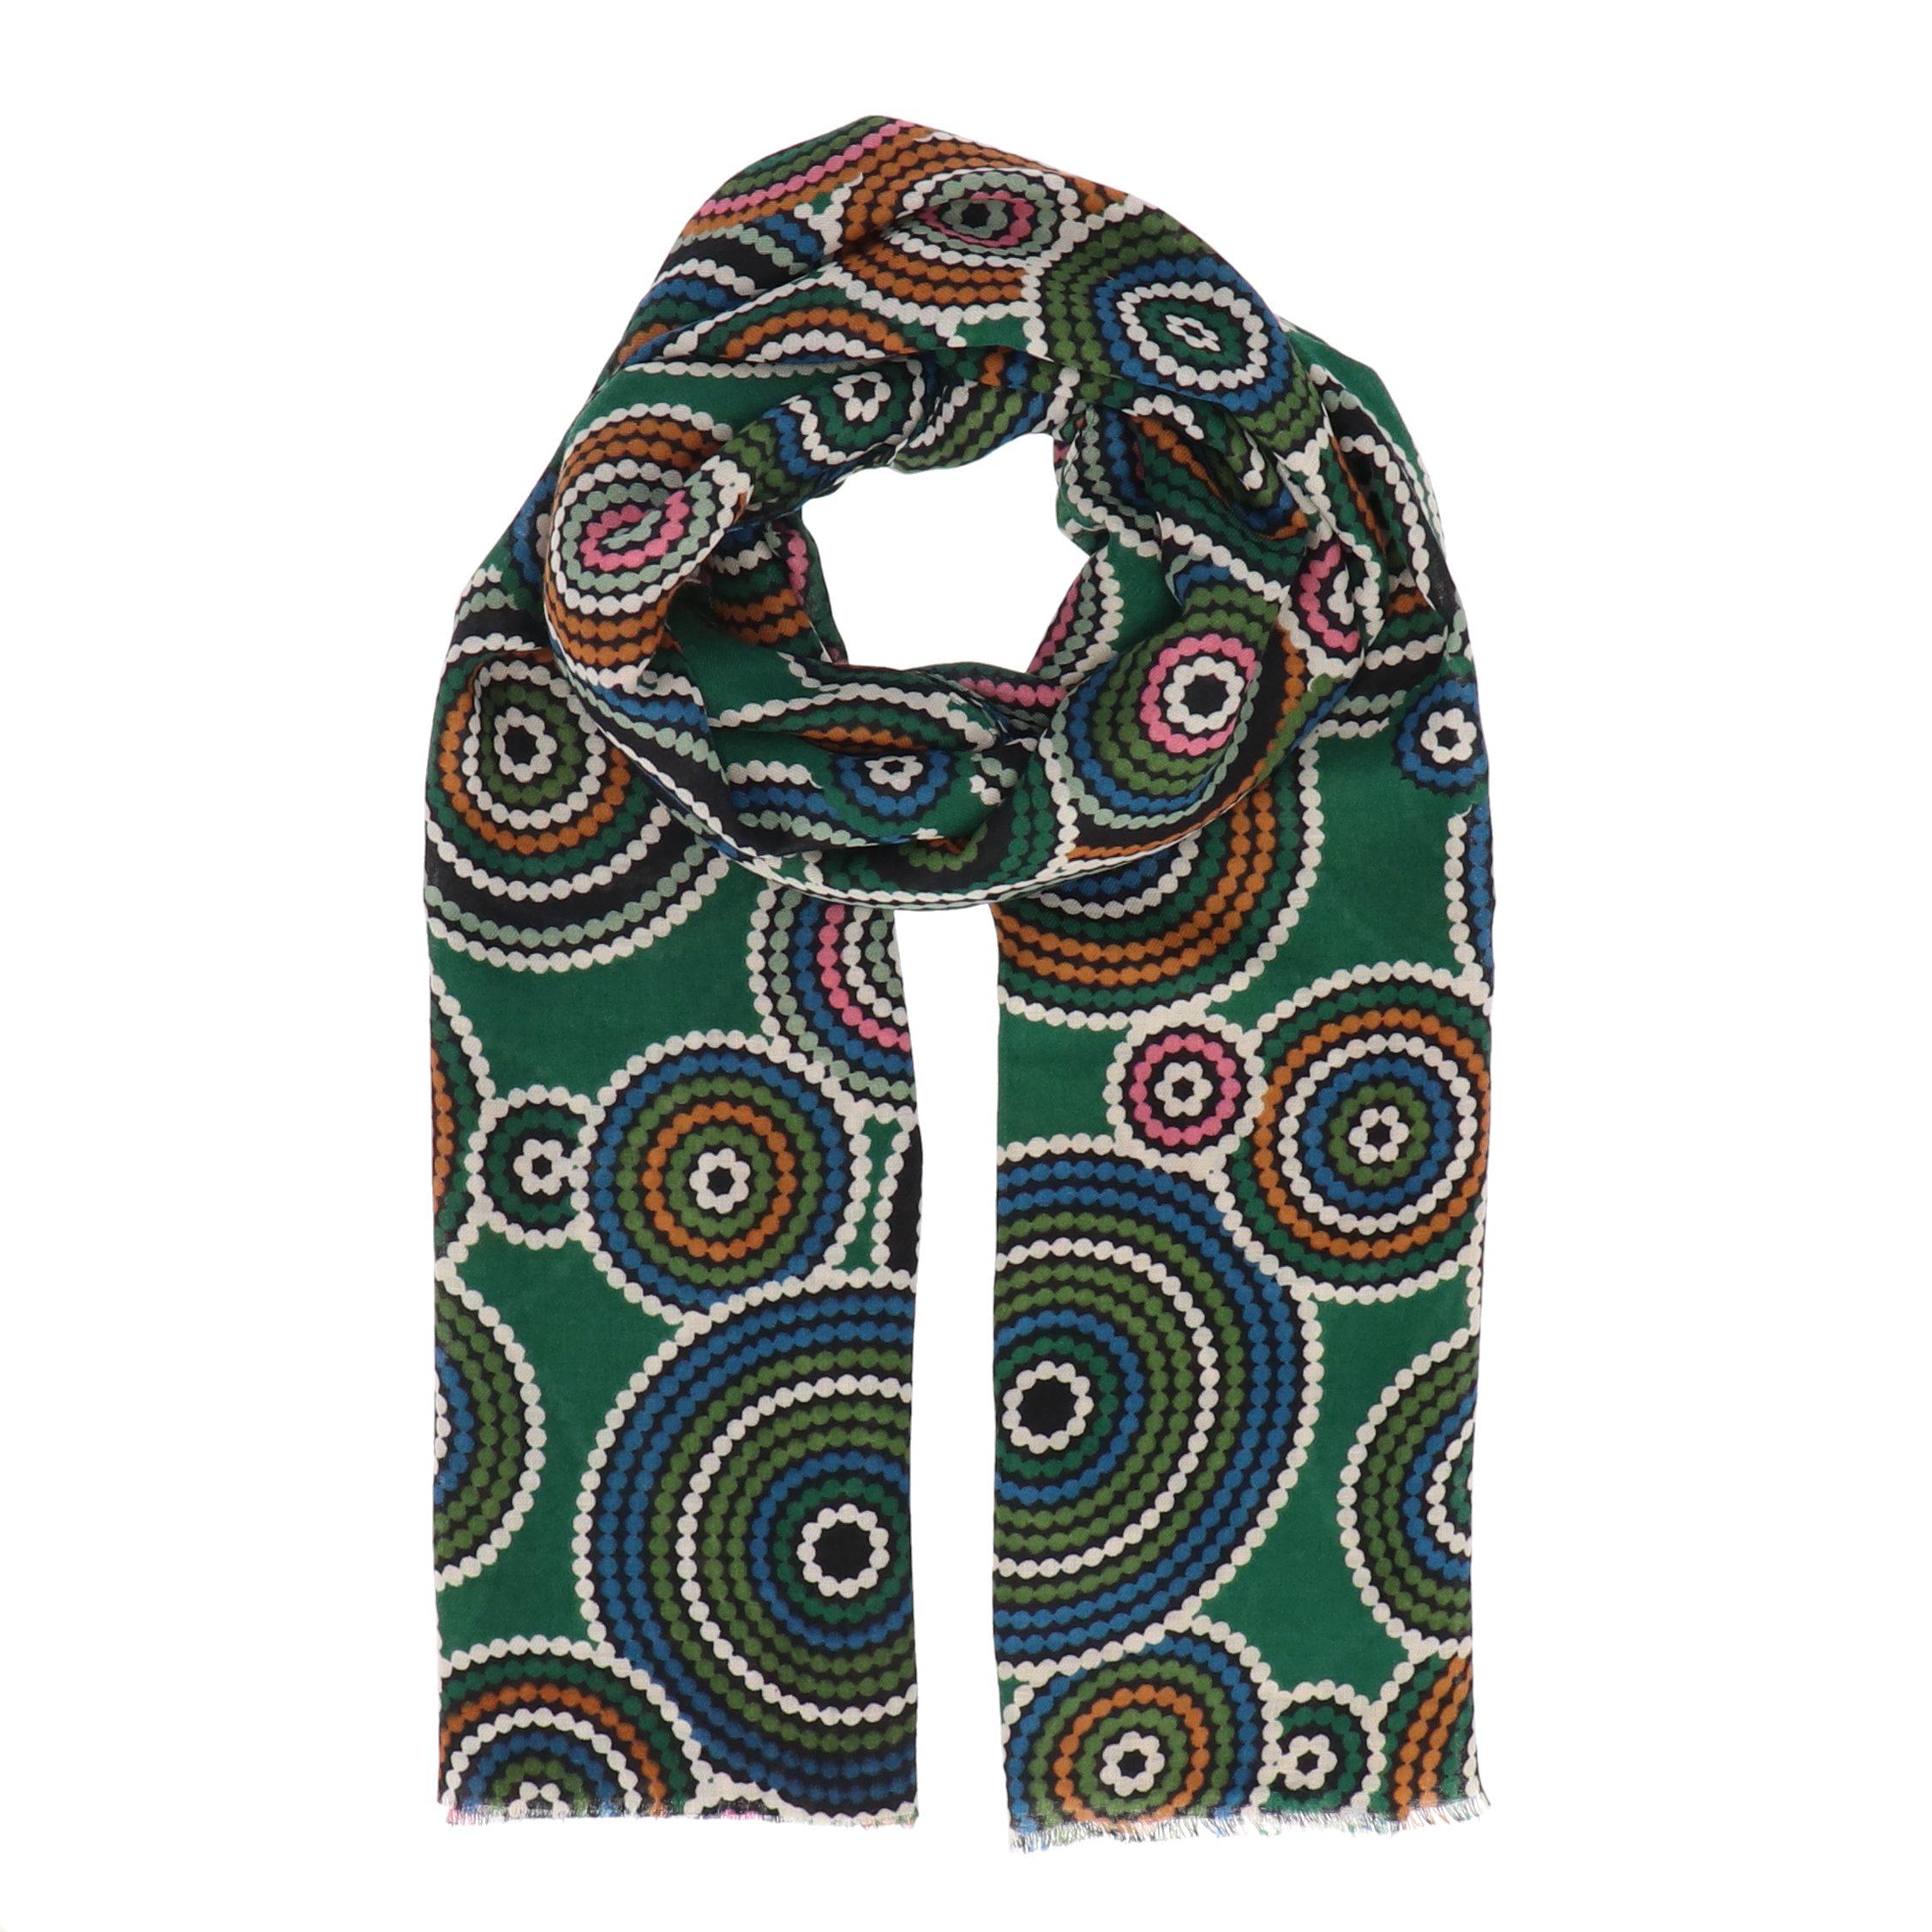 Farben! Mandala, in halsüberkopf Modeschal Accessoires Schal tollen grün